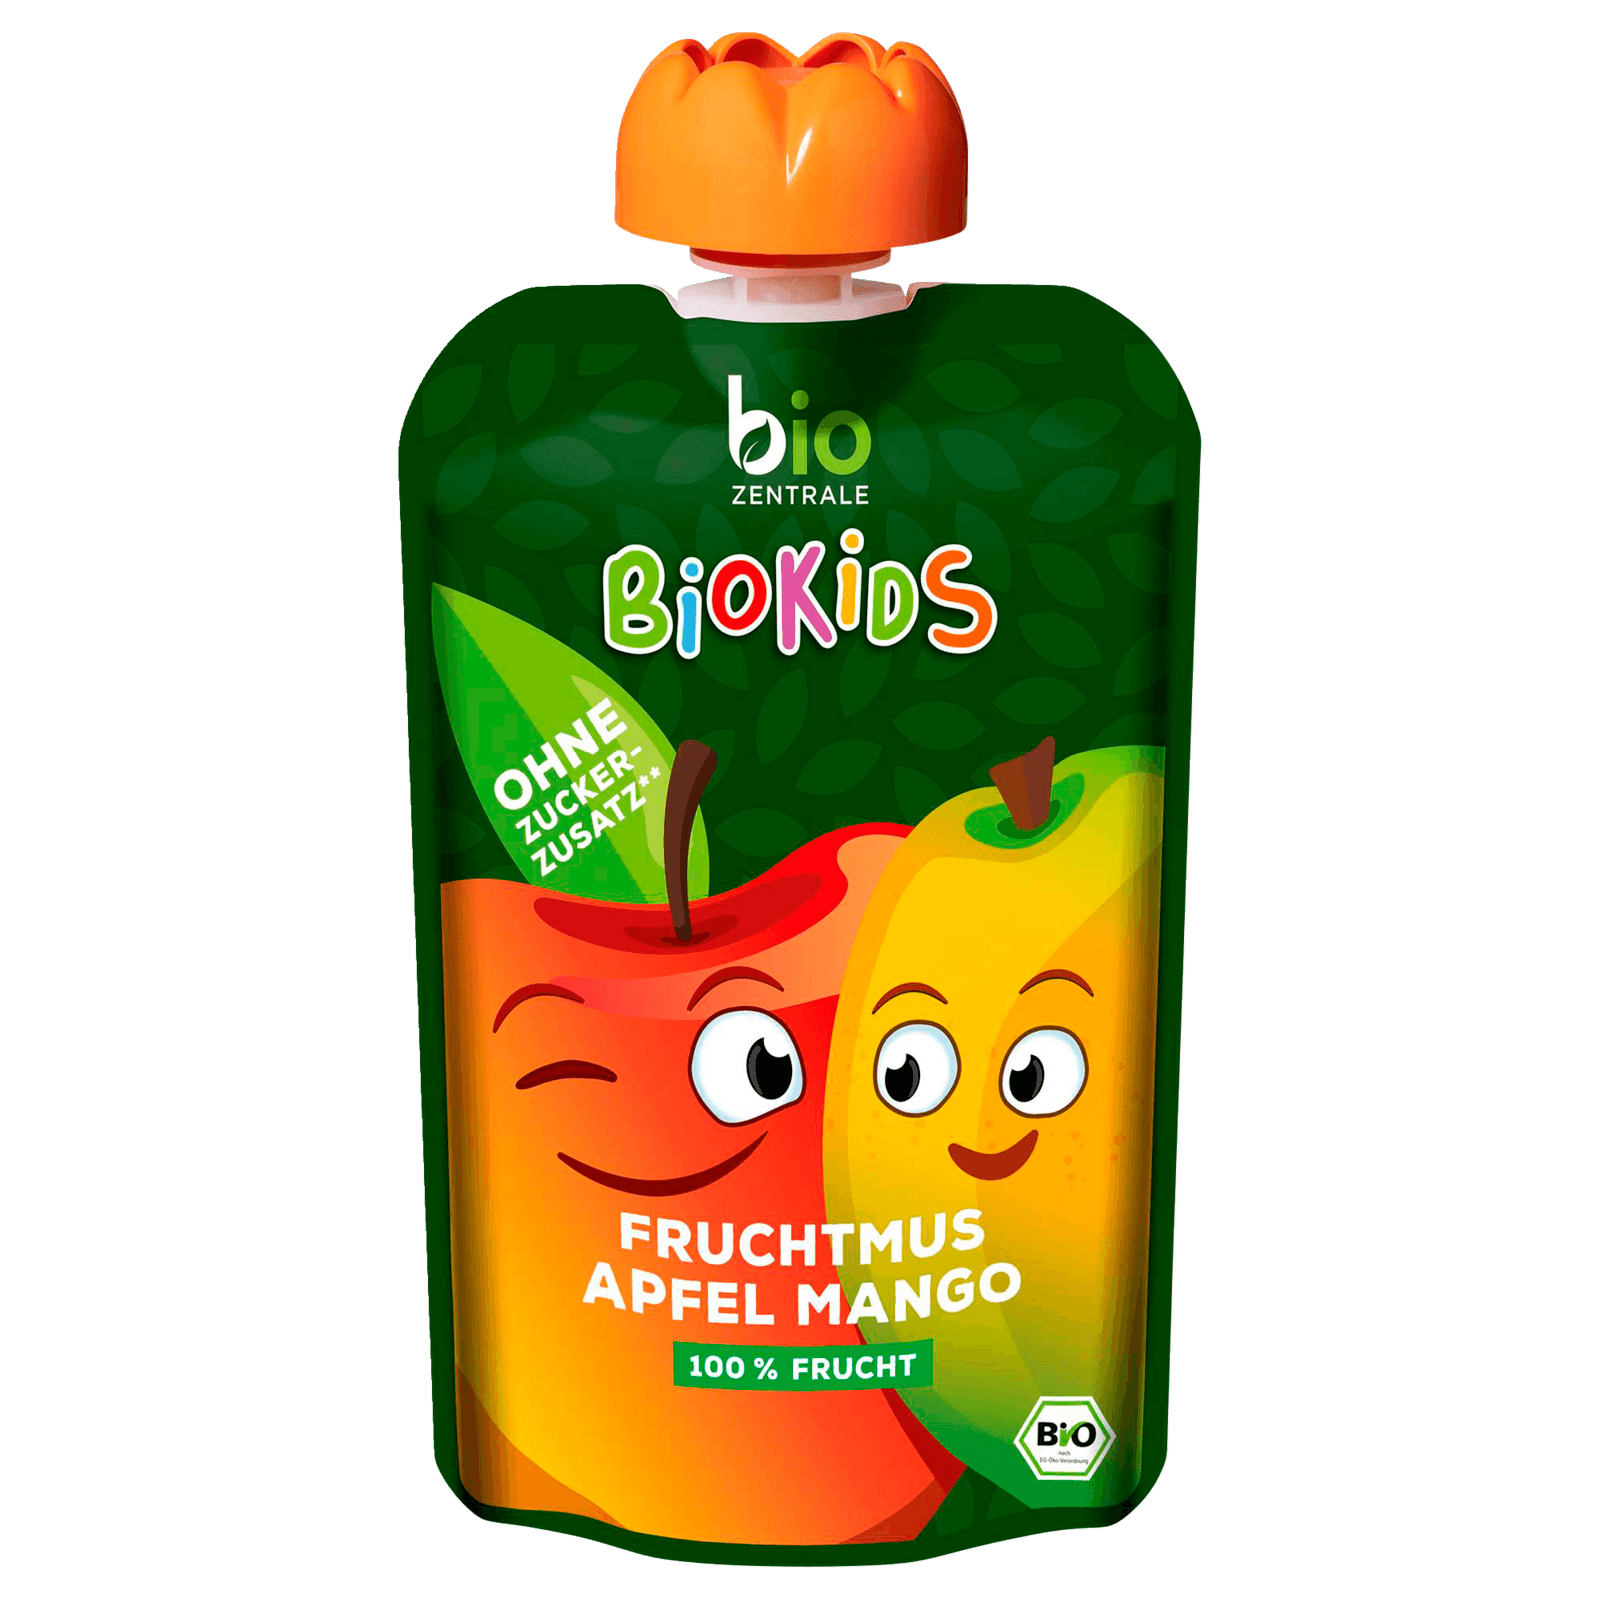 Bio Zentrale BioKids Fruchtmus Apfel-Mango 90g bei REWE online bestellen!